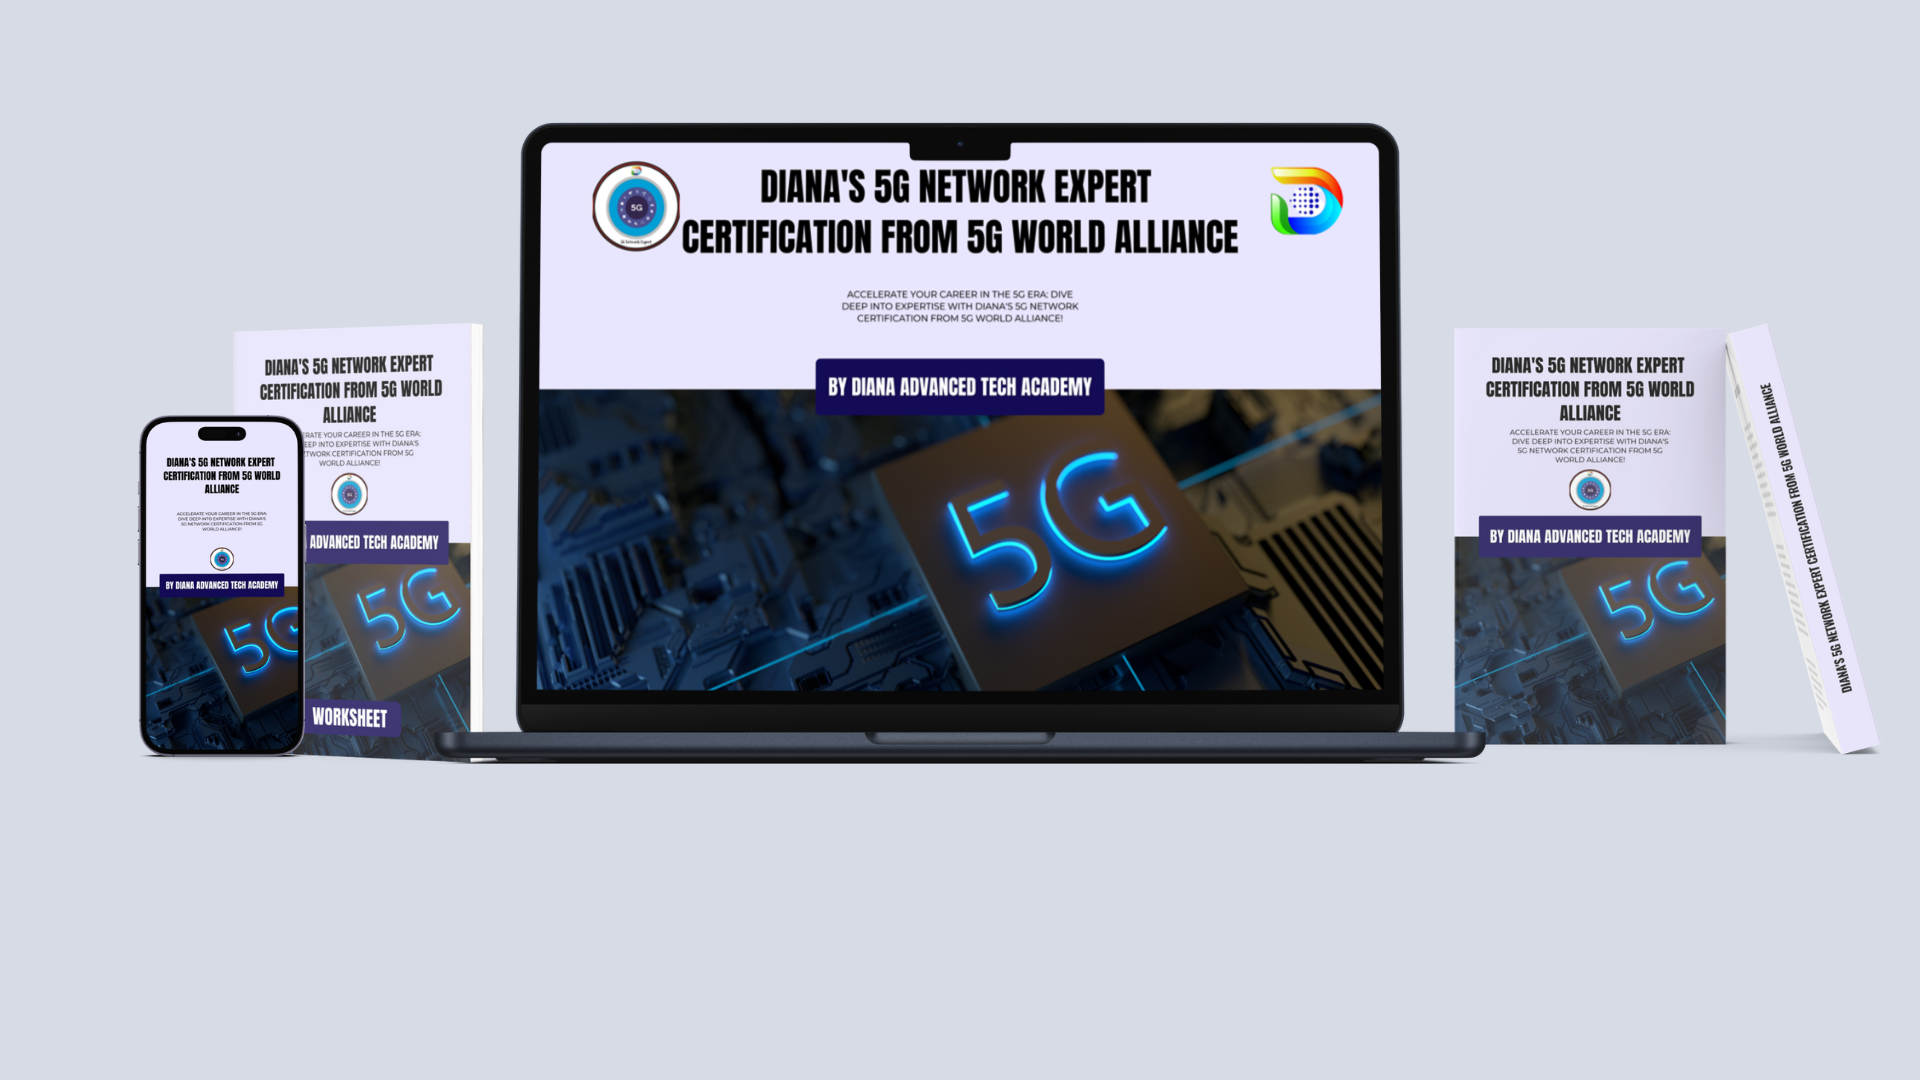 Diana’s 5G Network Expert Certification from 5G World Alliance